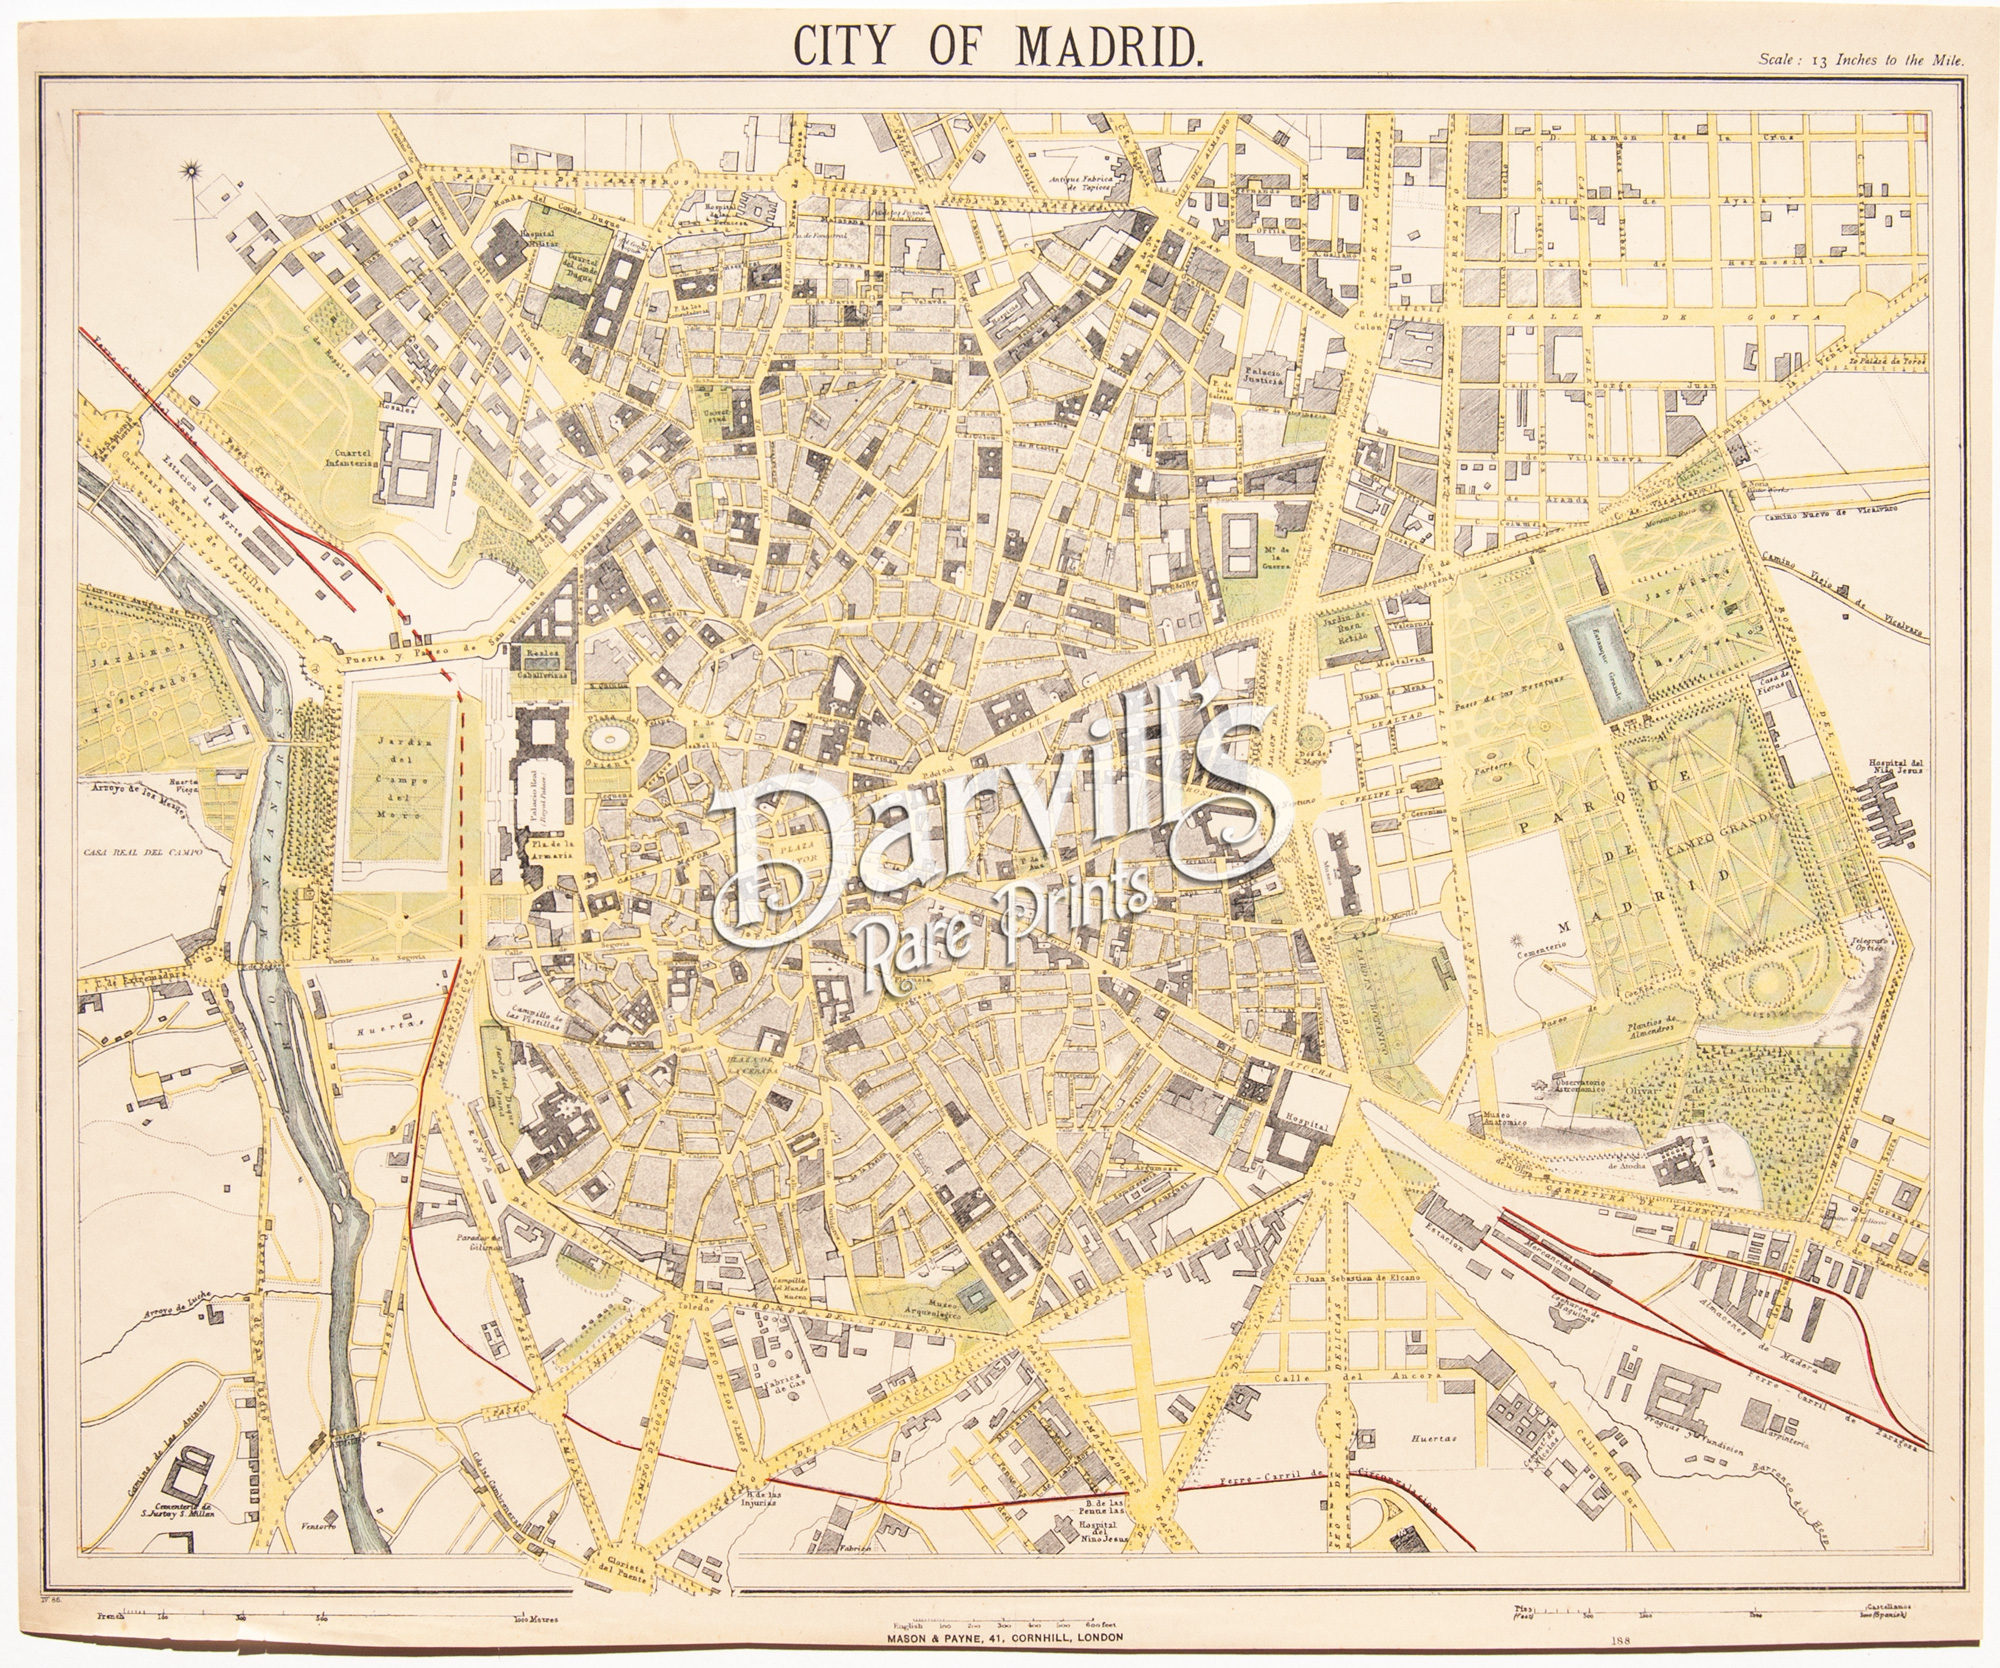 City of Madrid map 1884-1887